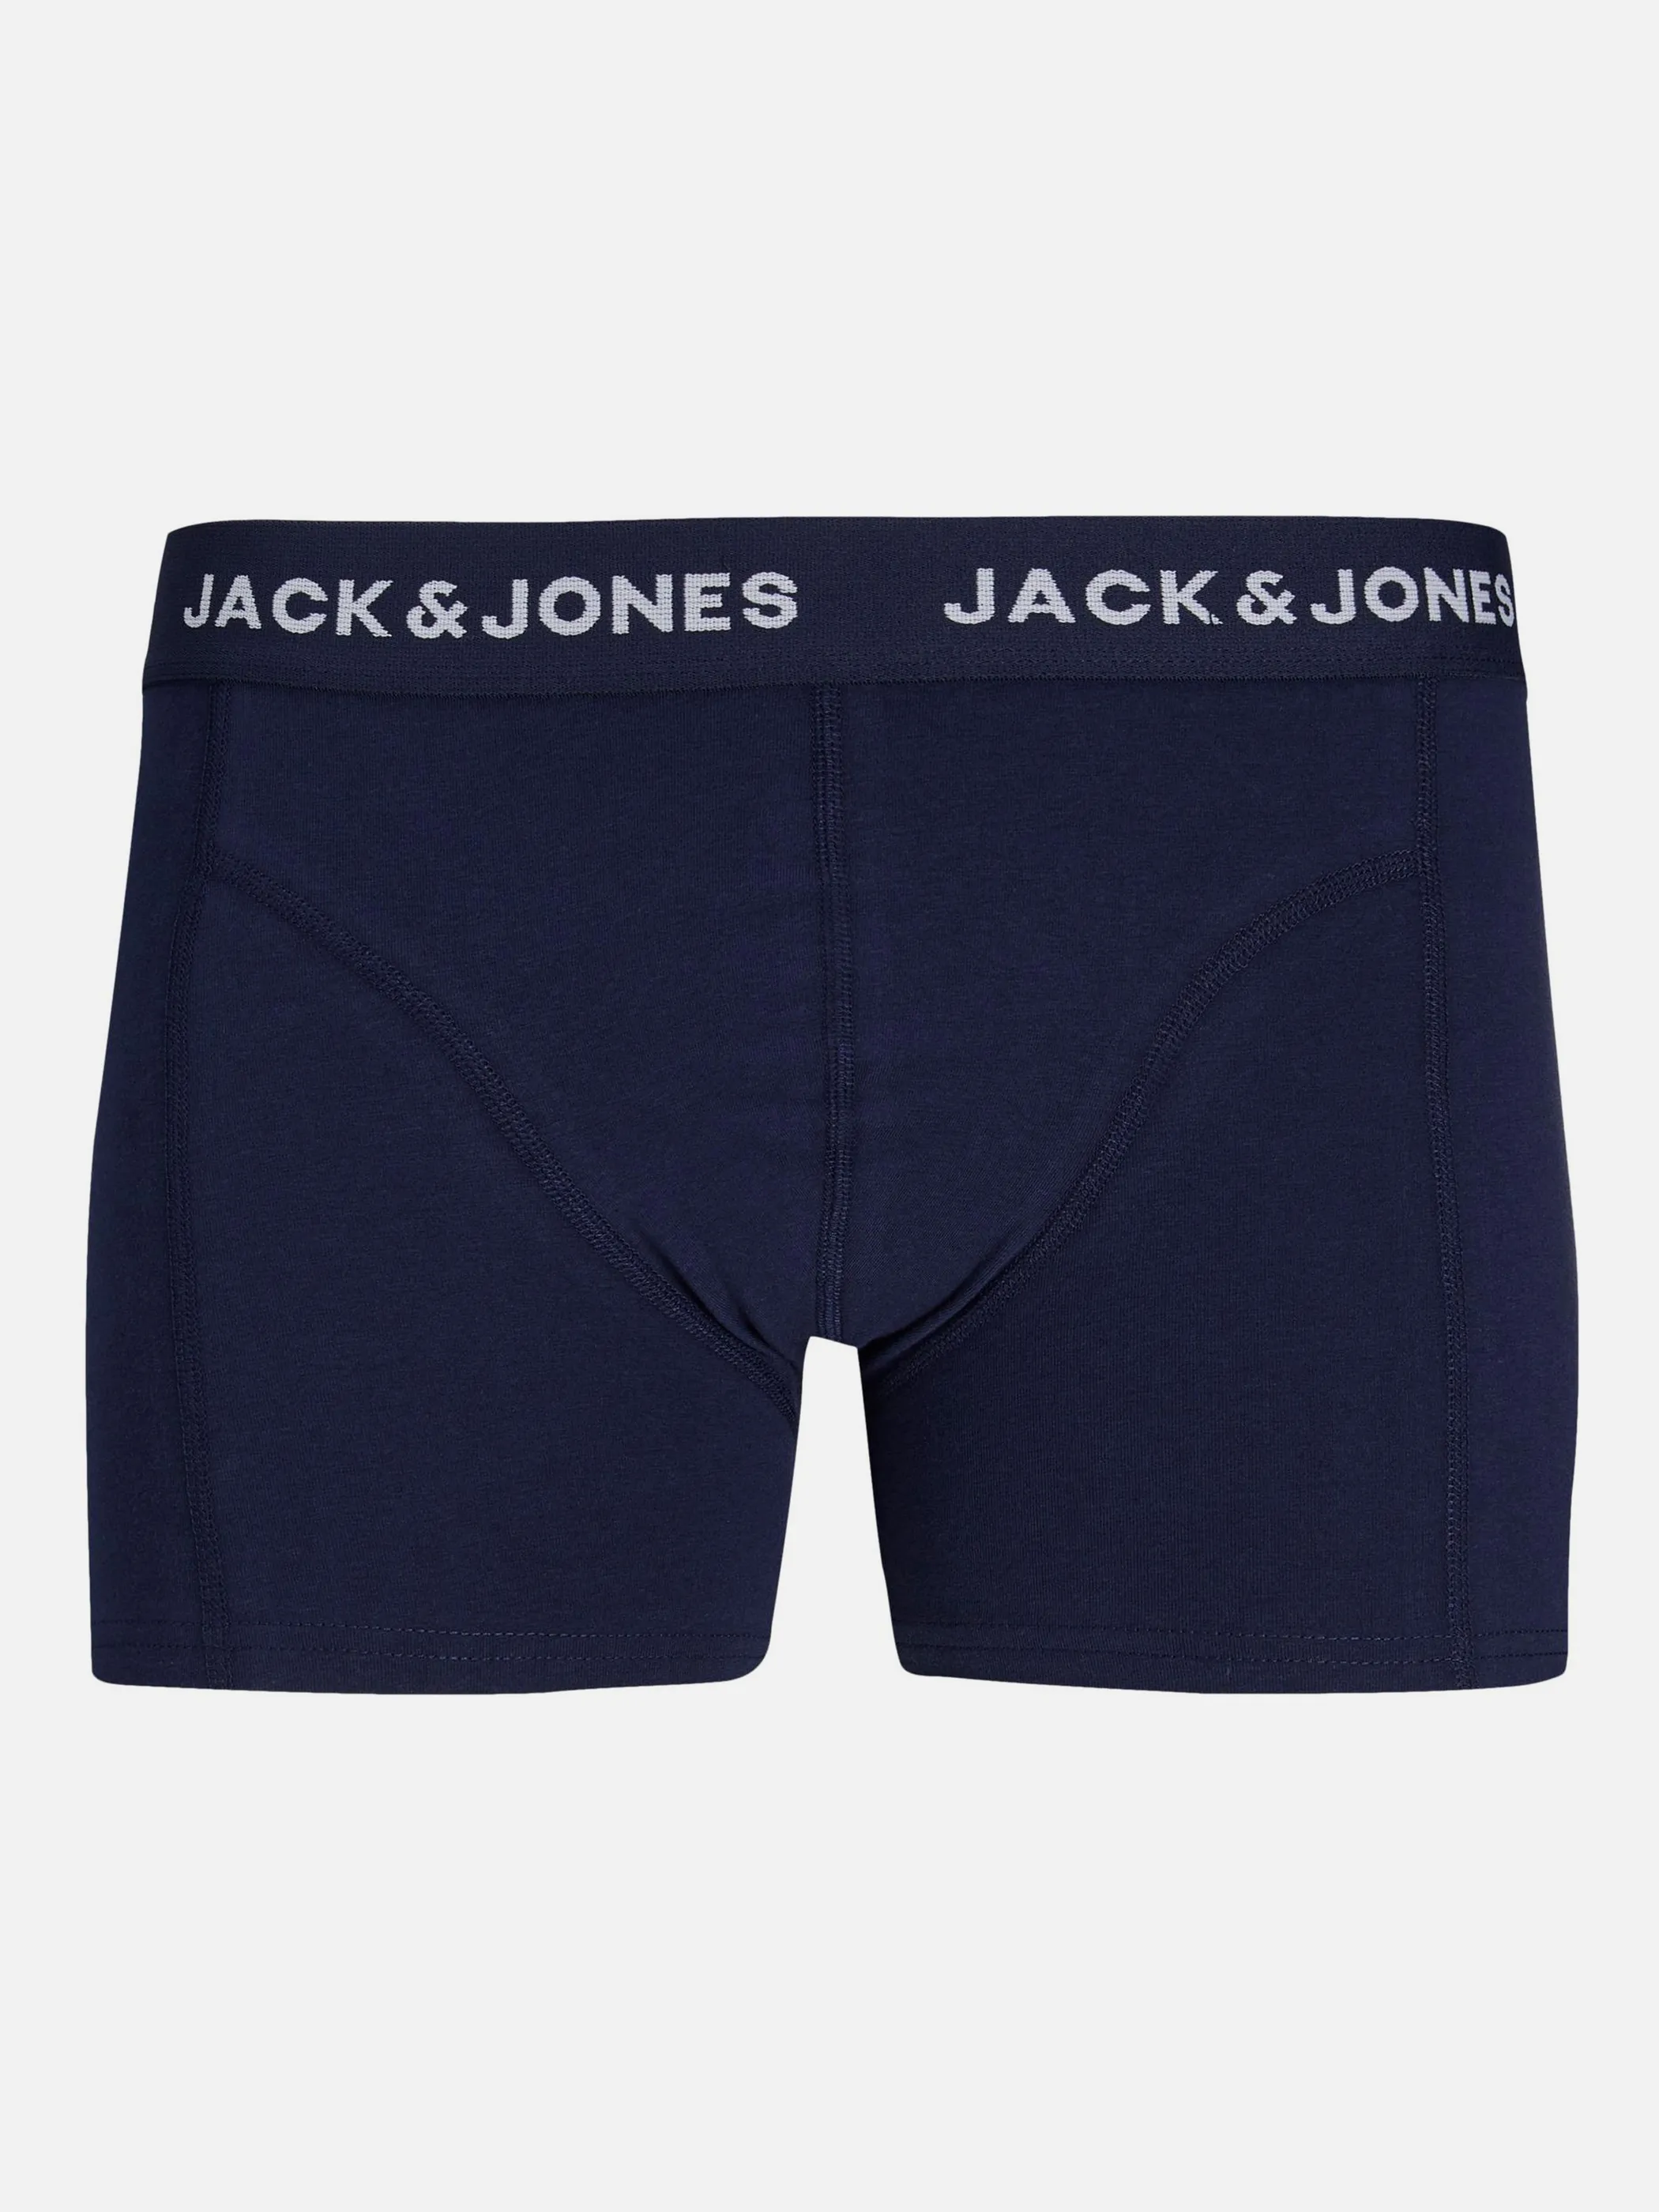 Jack Jones 12211161 JACPAISLEY TRUNKS 3-P Grau 867018 175703001 3